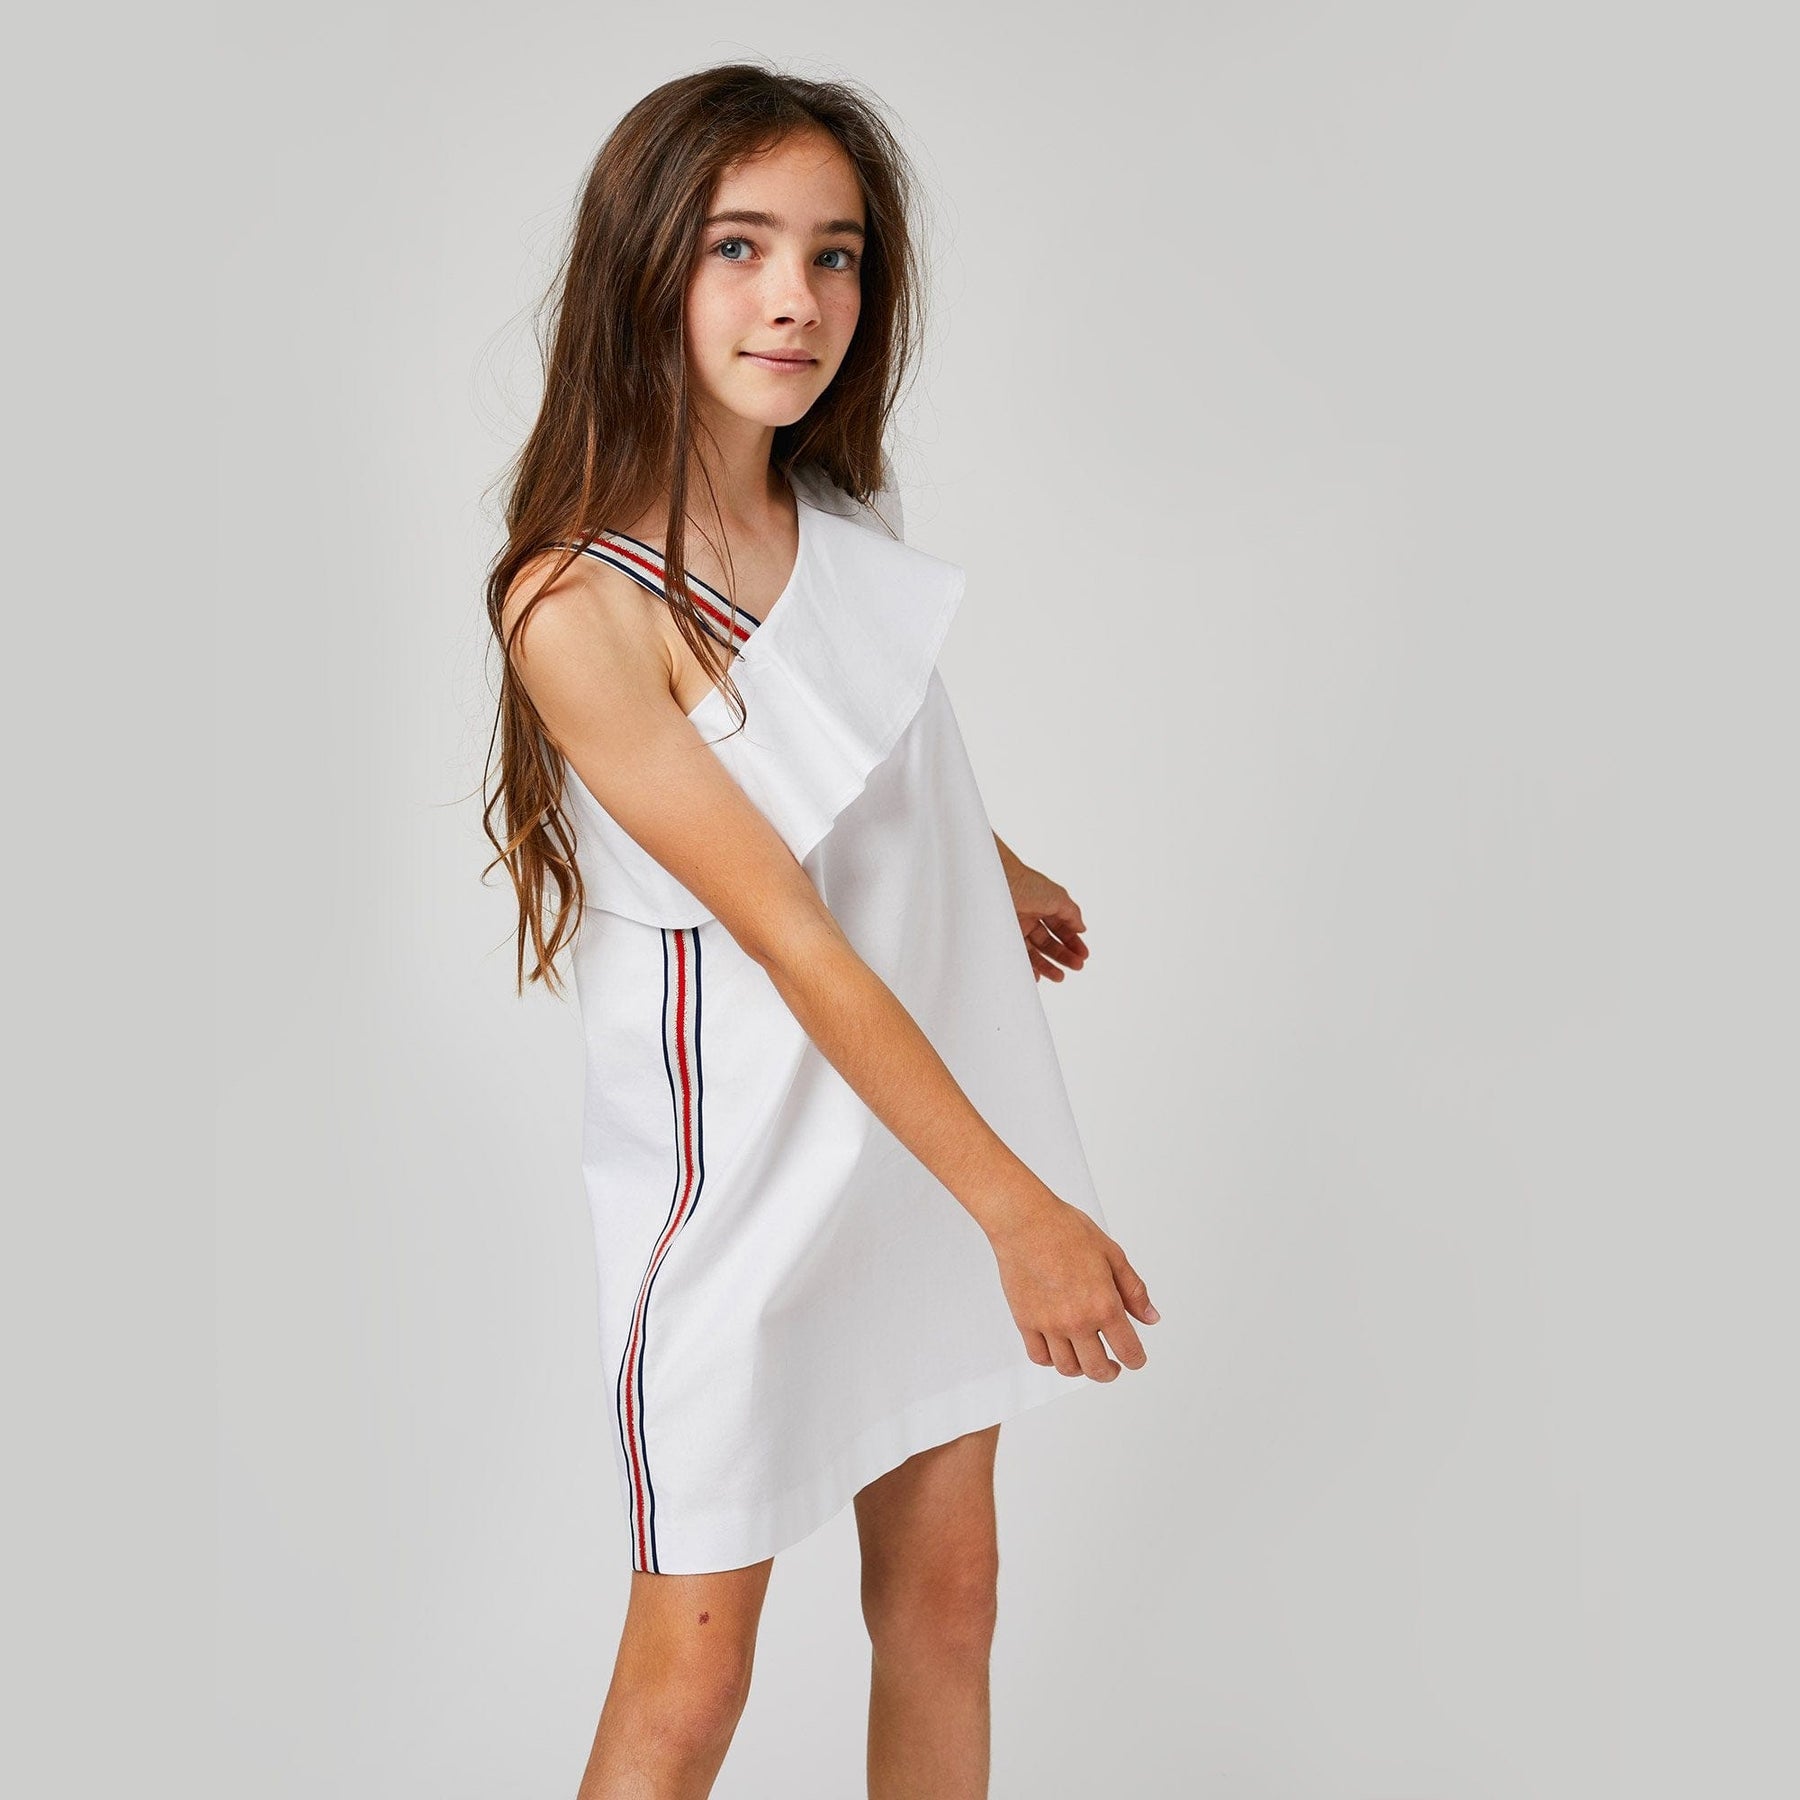 CONGUITOS TEXTIL Clothing Girls White Asymmetric Dress